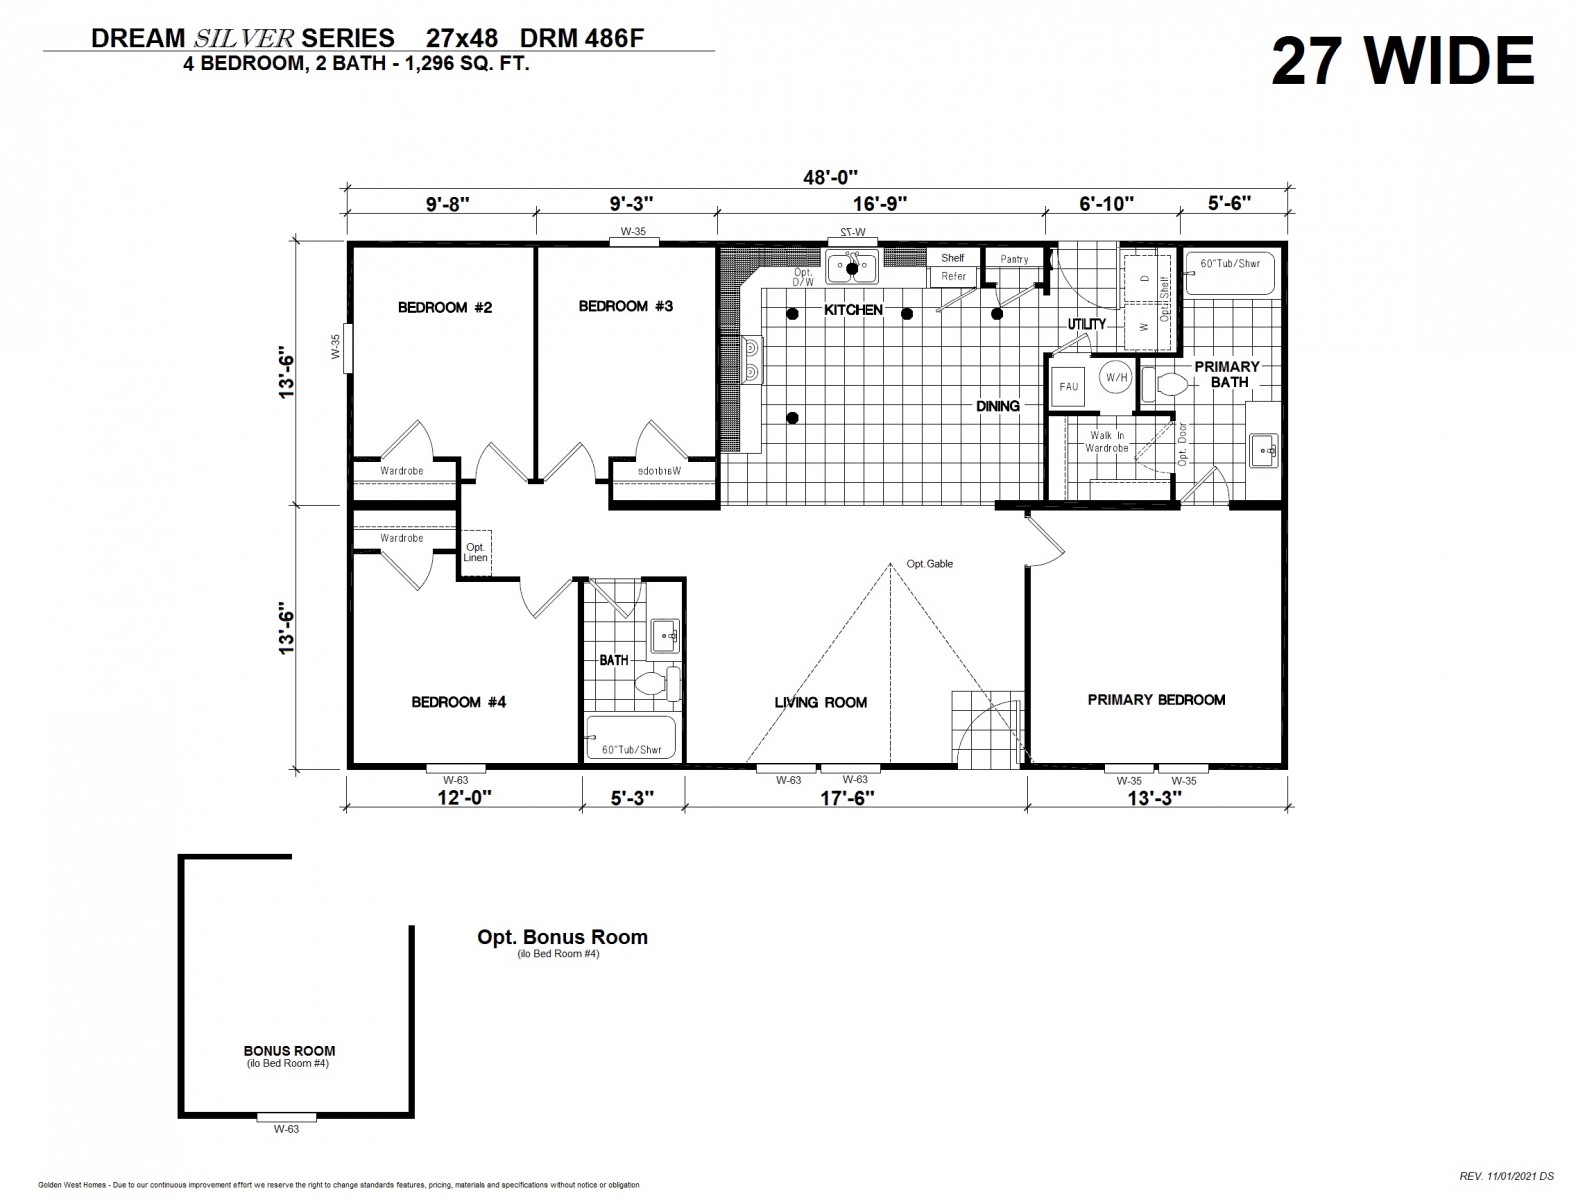 Homes Direct Modular Homes - Model DRM486F - Floorplan